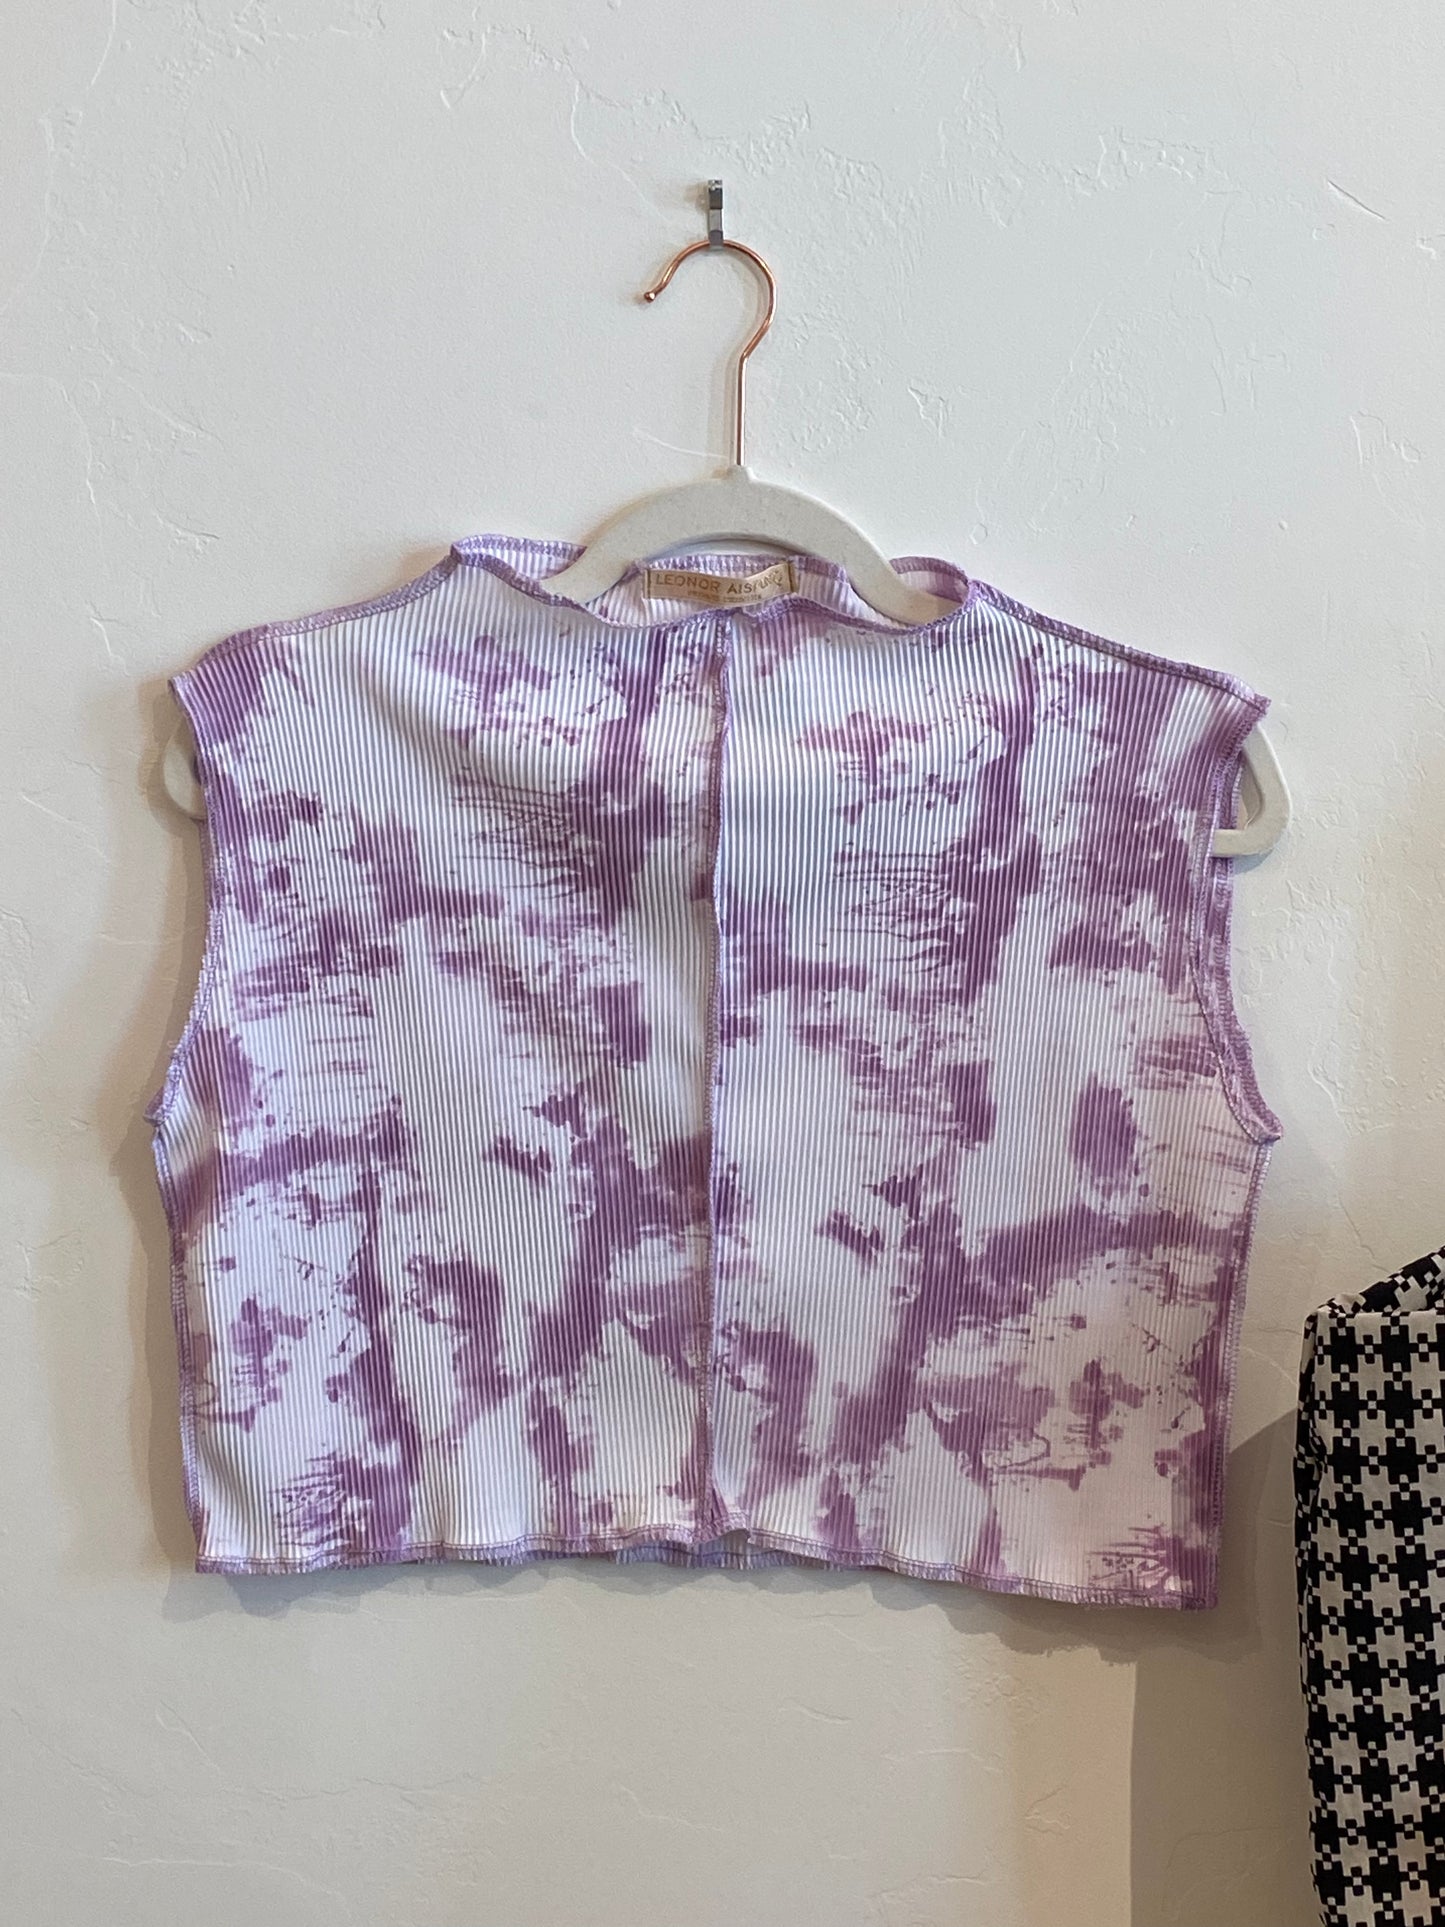 Leonor Aispuro - Tie Dye Crop Top in Purple